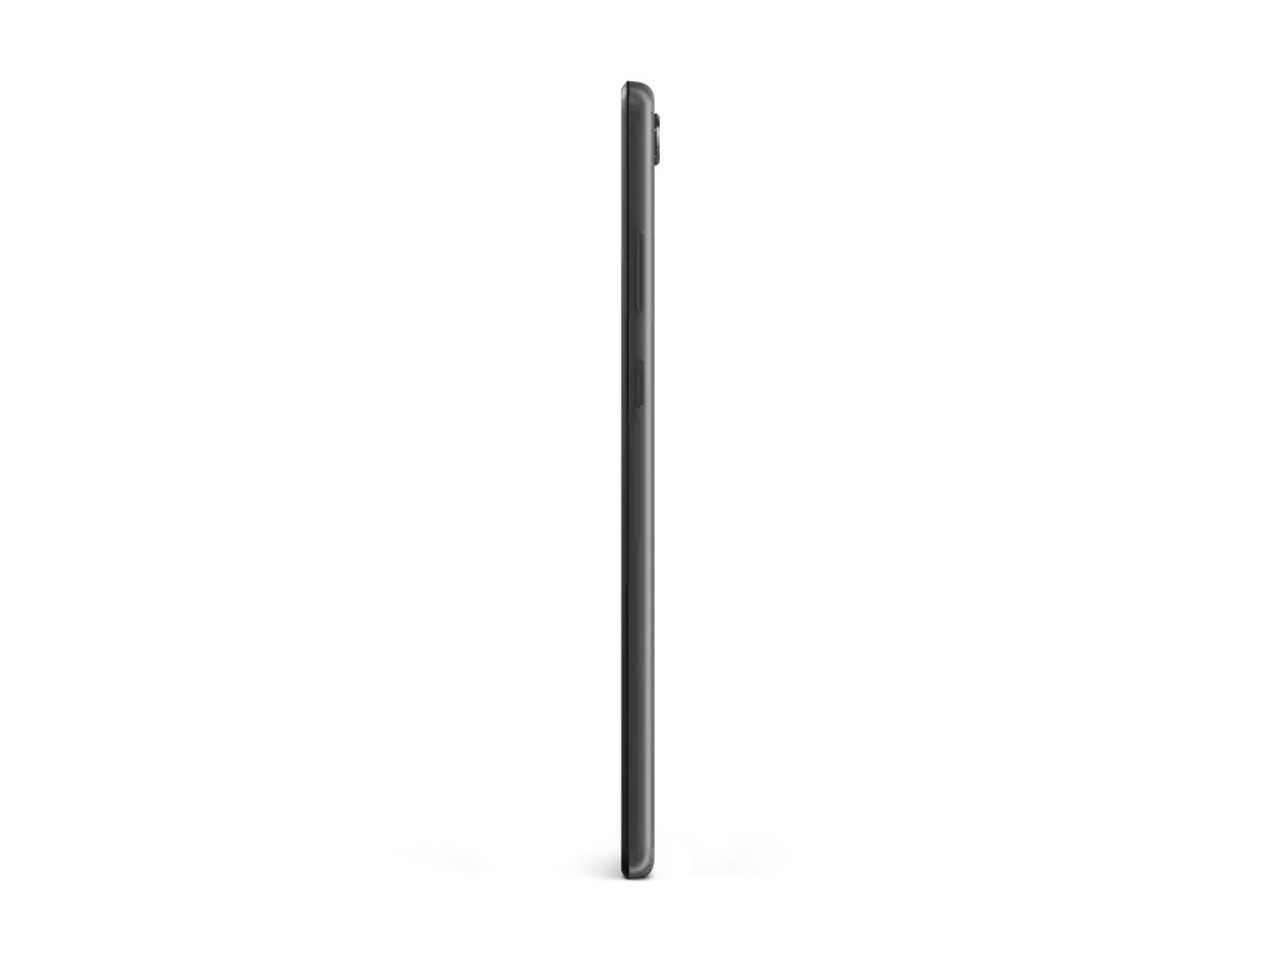 Lenovo Tab M8 Gen2 8" HD MediaTek Helio A22 2GB Ram 16GB eMMC Android 9 | ZA5G0132US | Manufacturer Refurbished